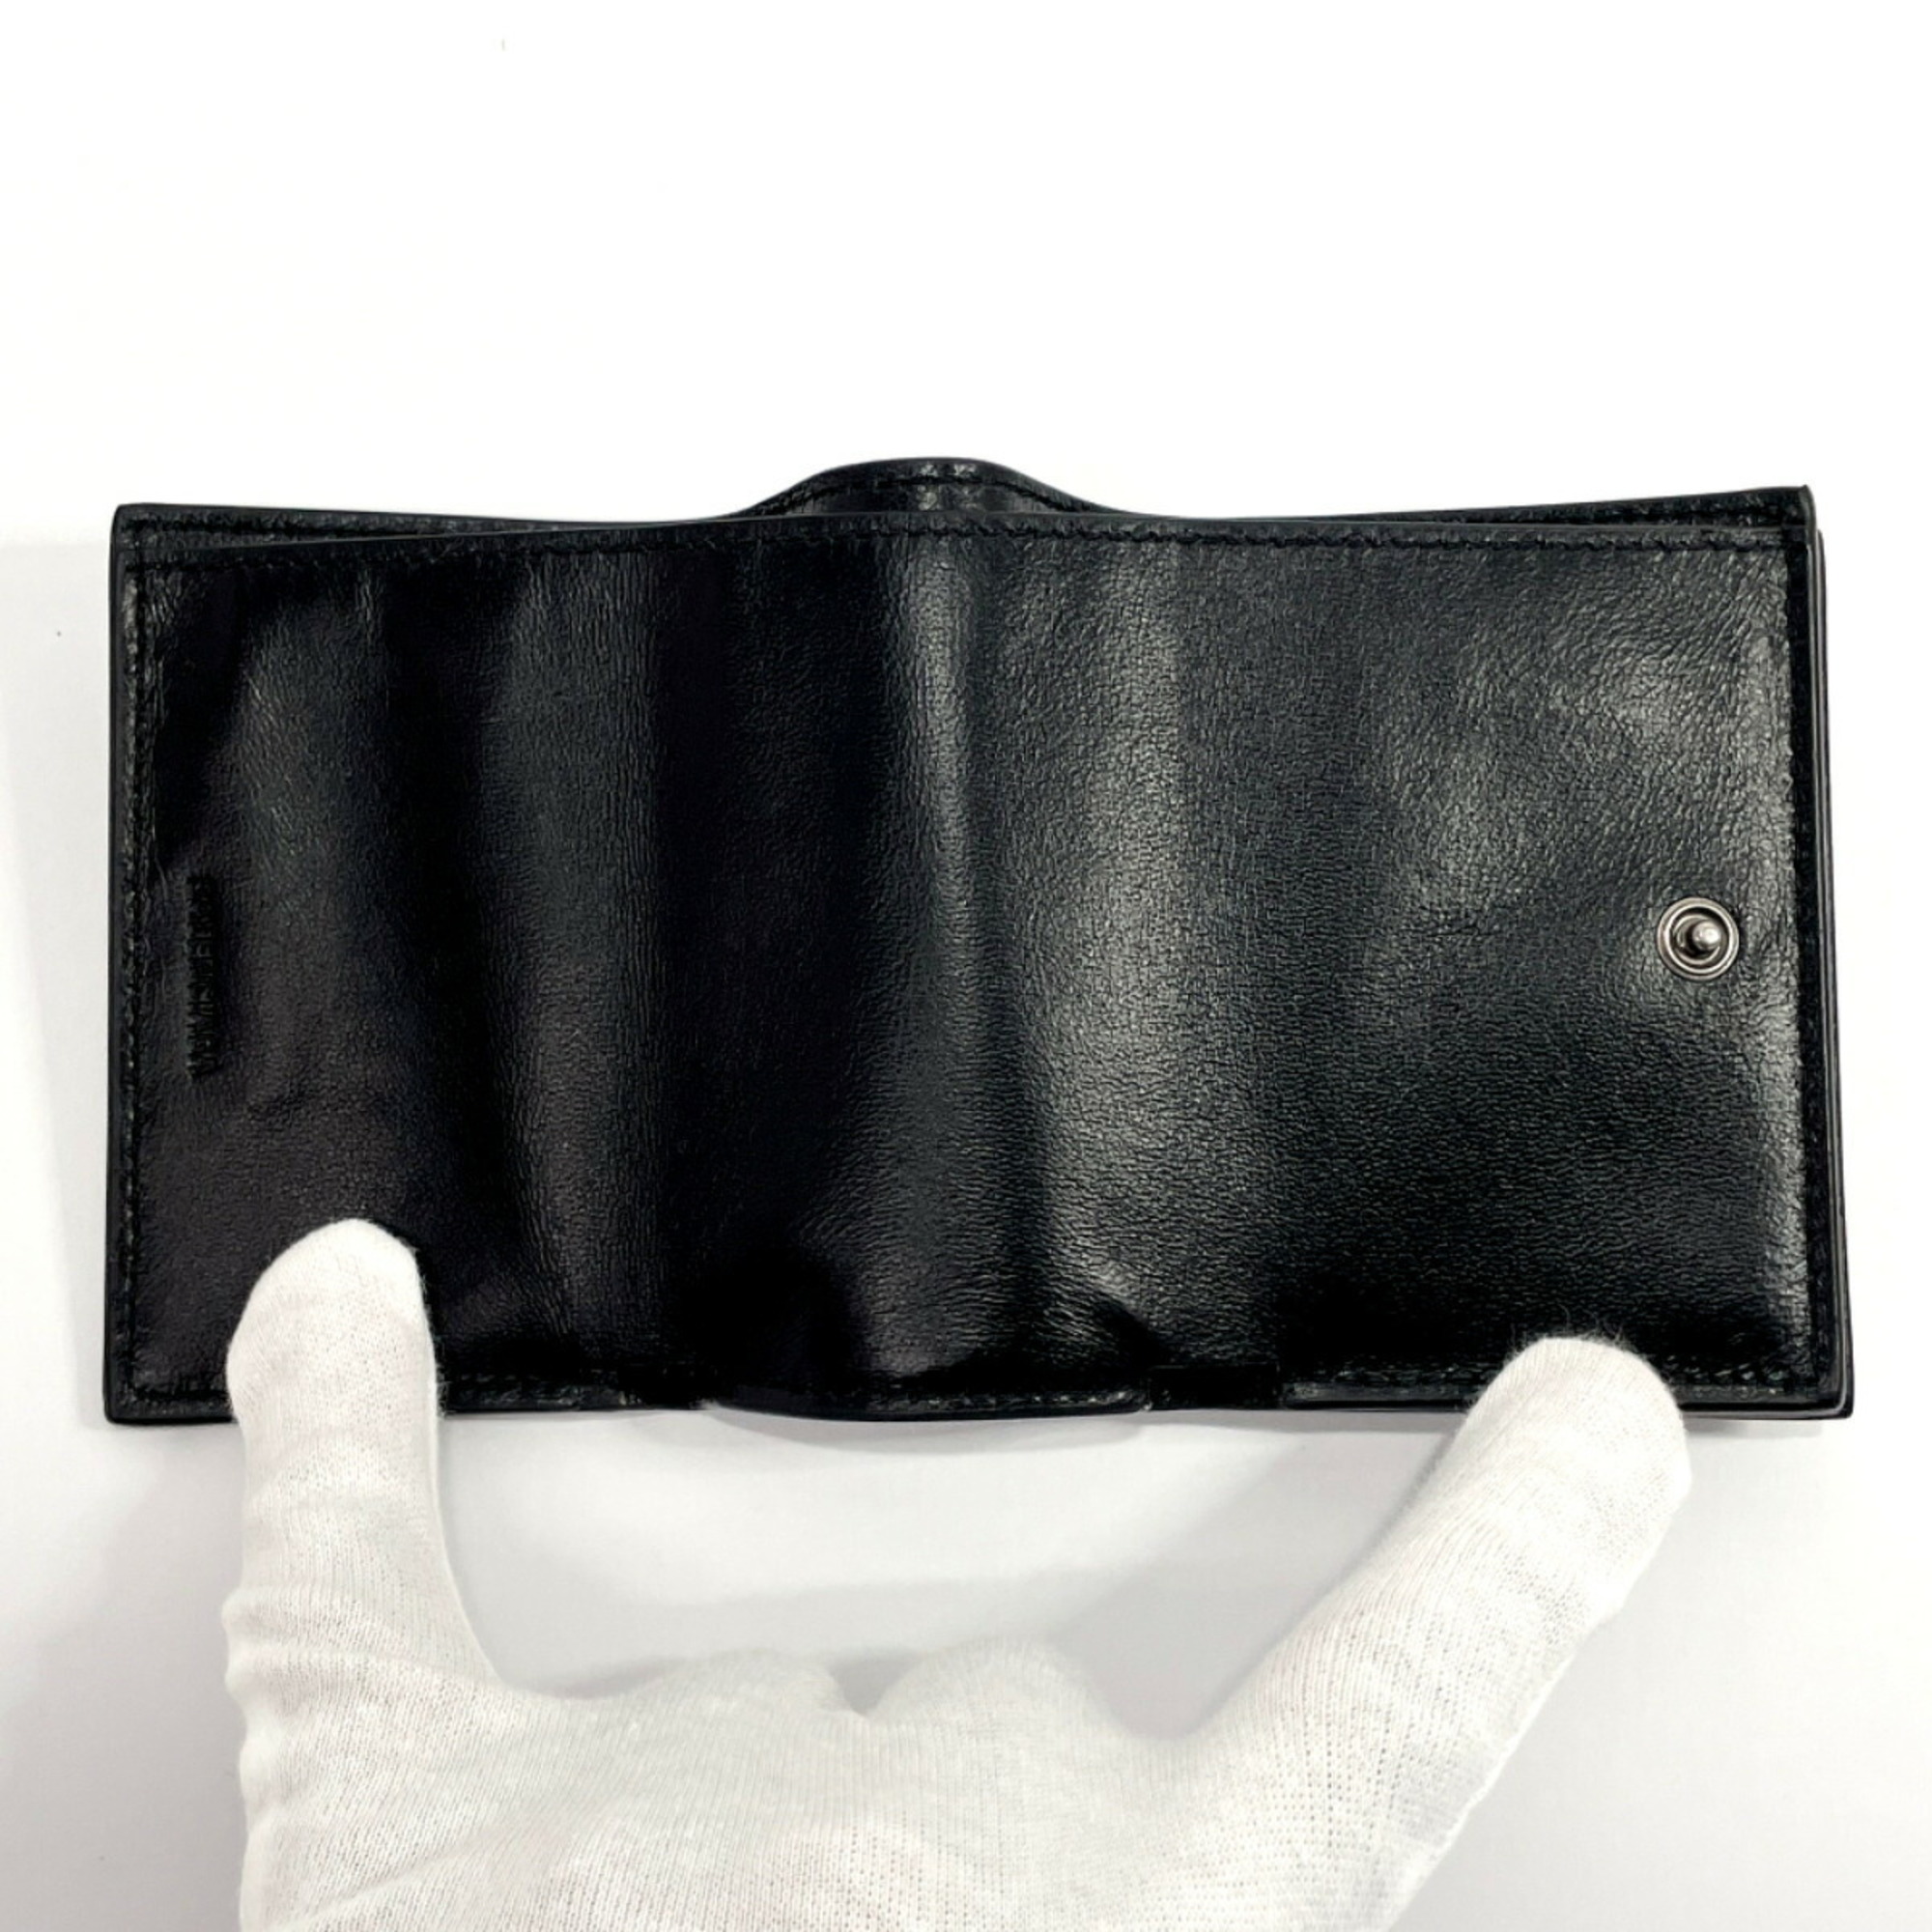 Balenciaga ESSENTIAL MINI WALLET Trifold Wallet Leather BALENCIAGA 664037 Women's Black